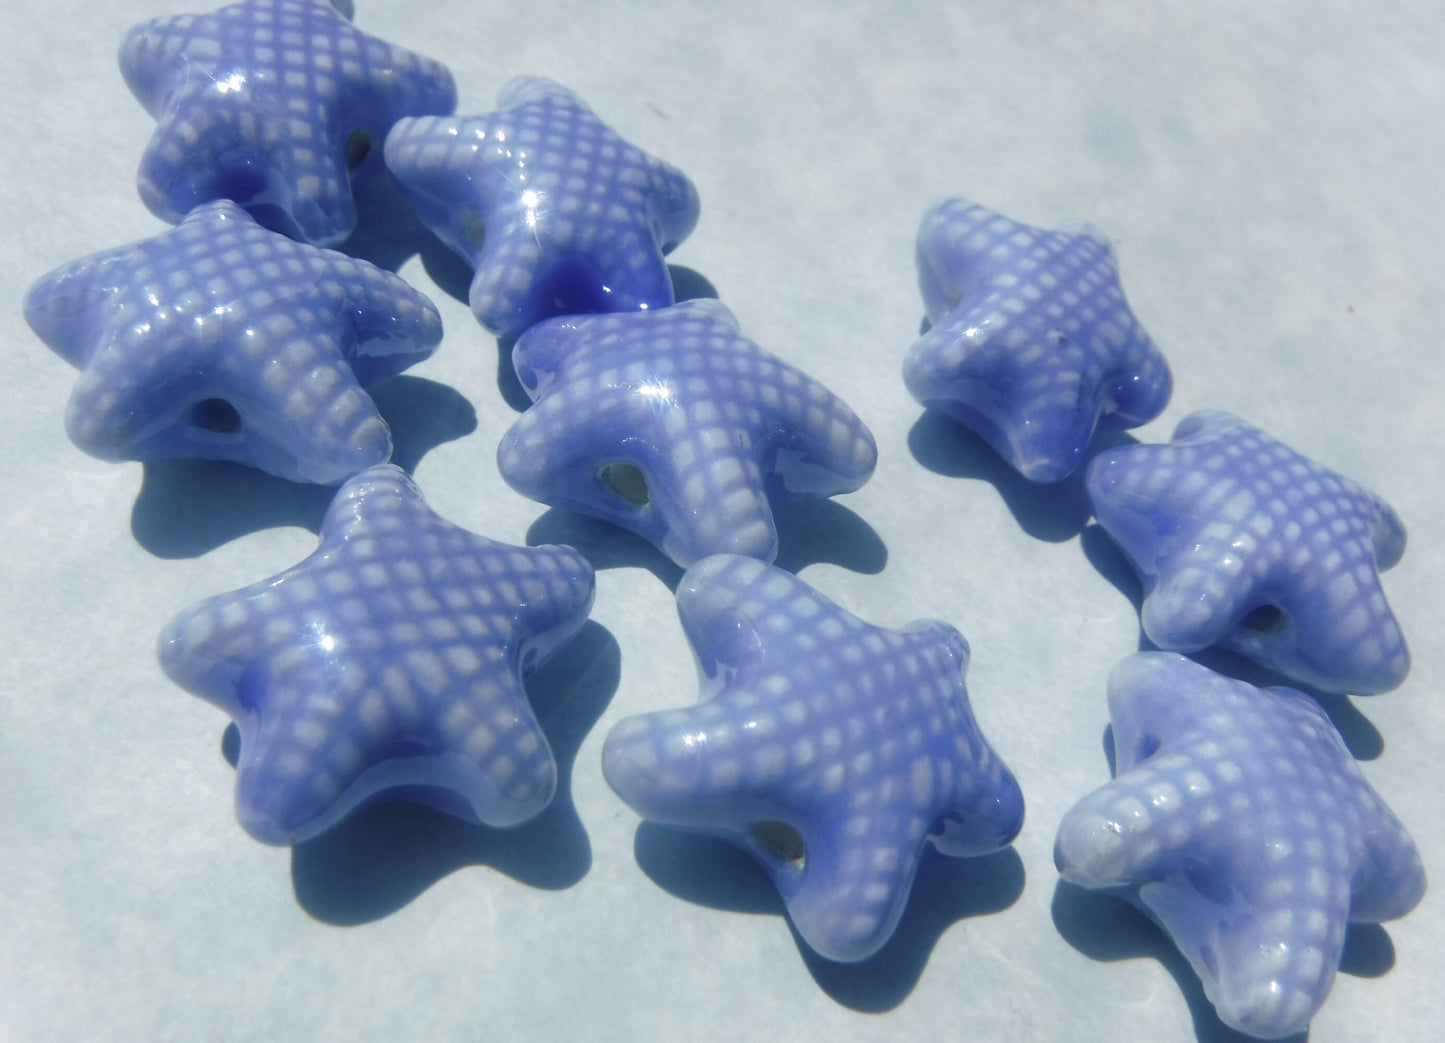 Periwinkle Blue Starfish Beads - Ceramic Mosaic Tiles - 10 Puffy Beads - Sea Stars